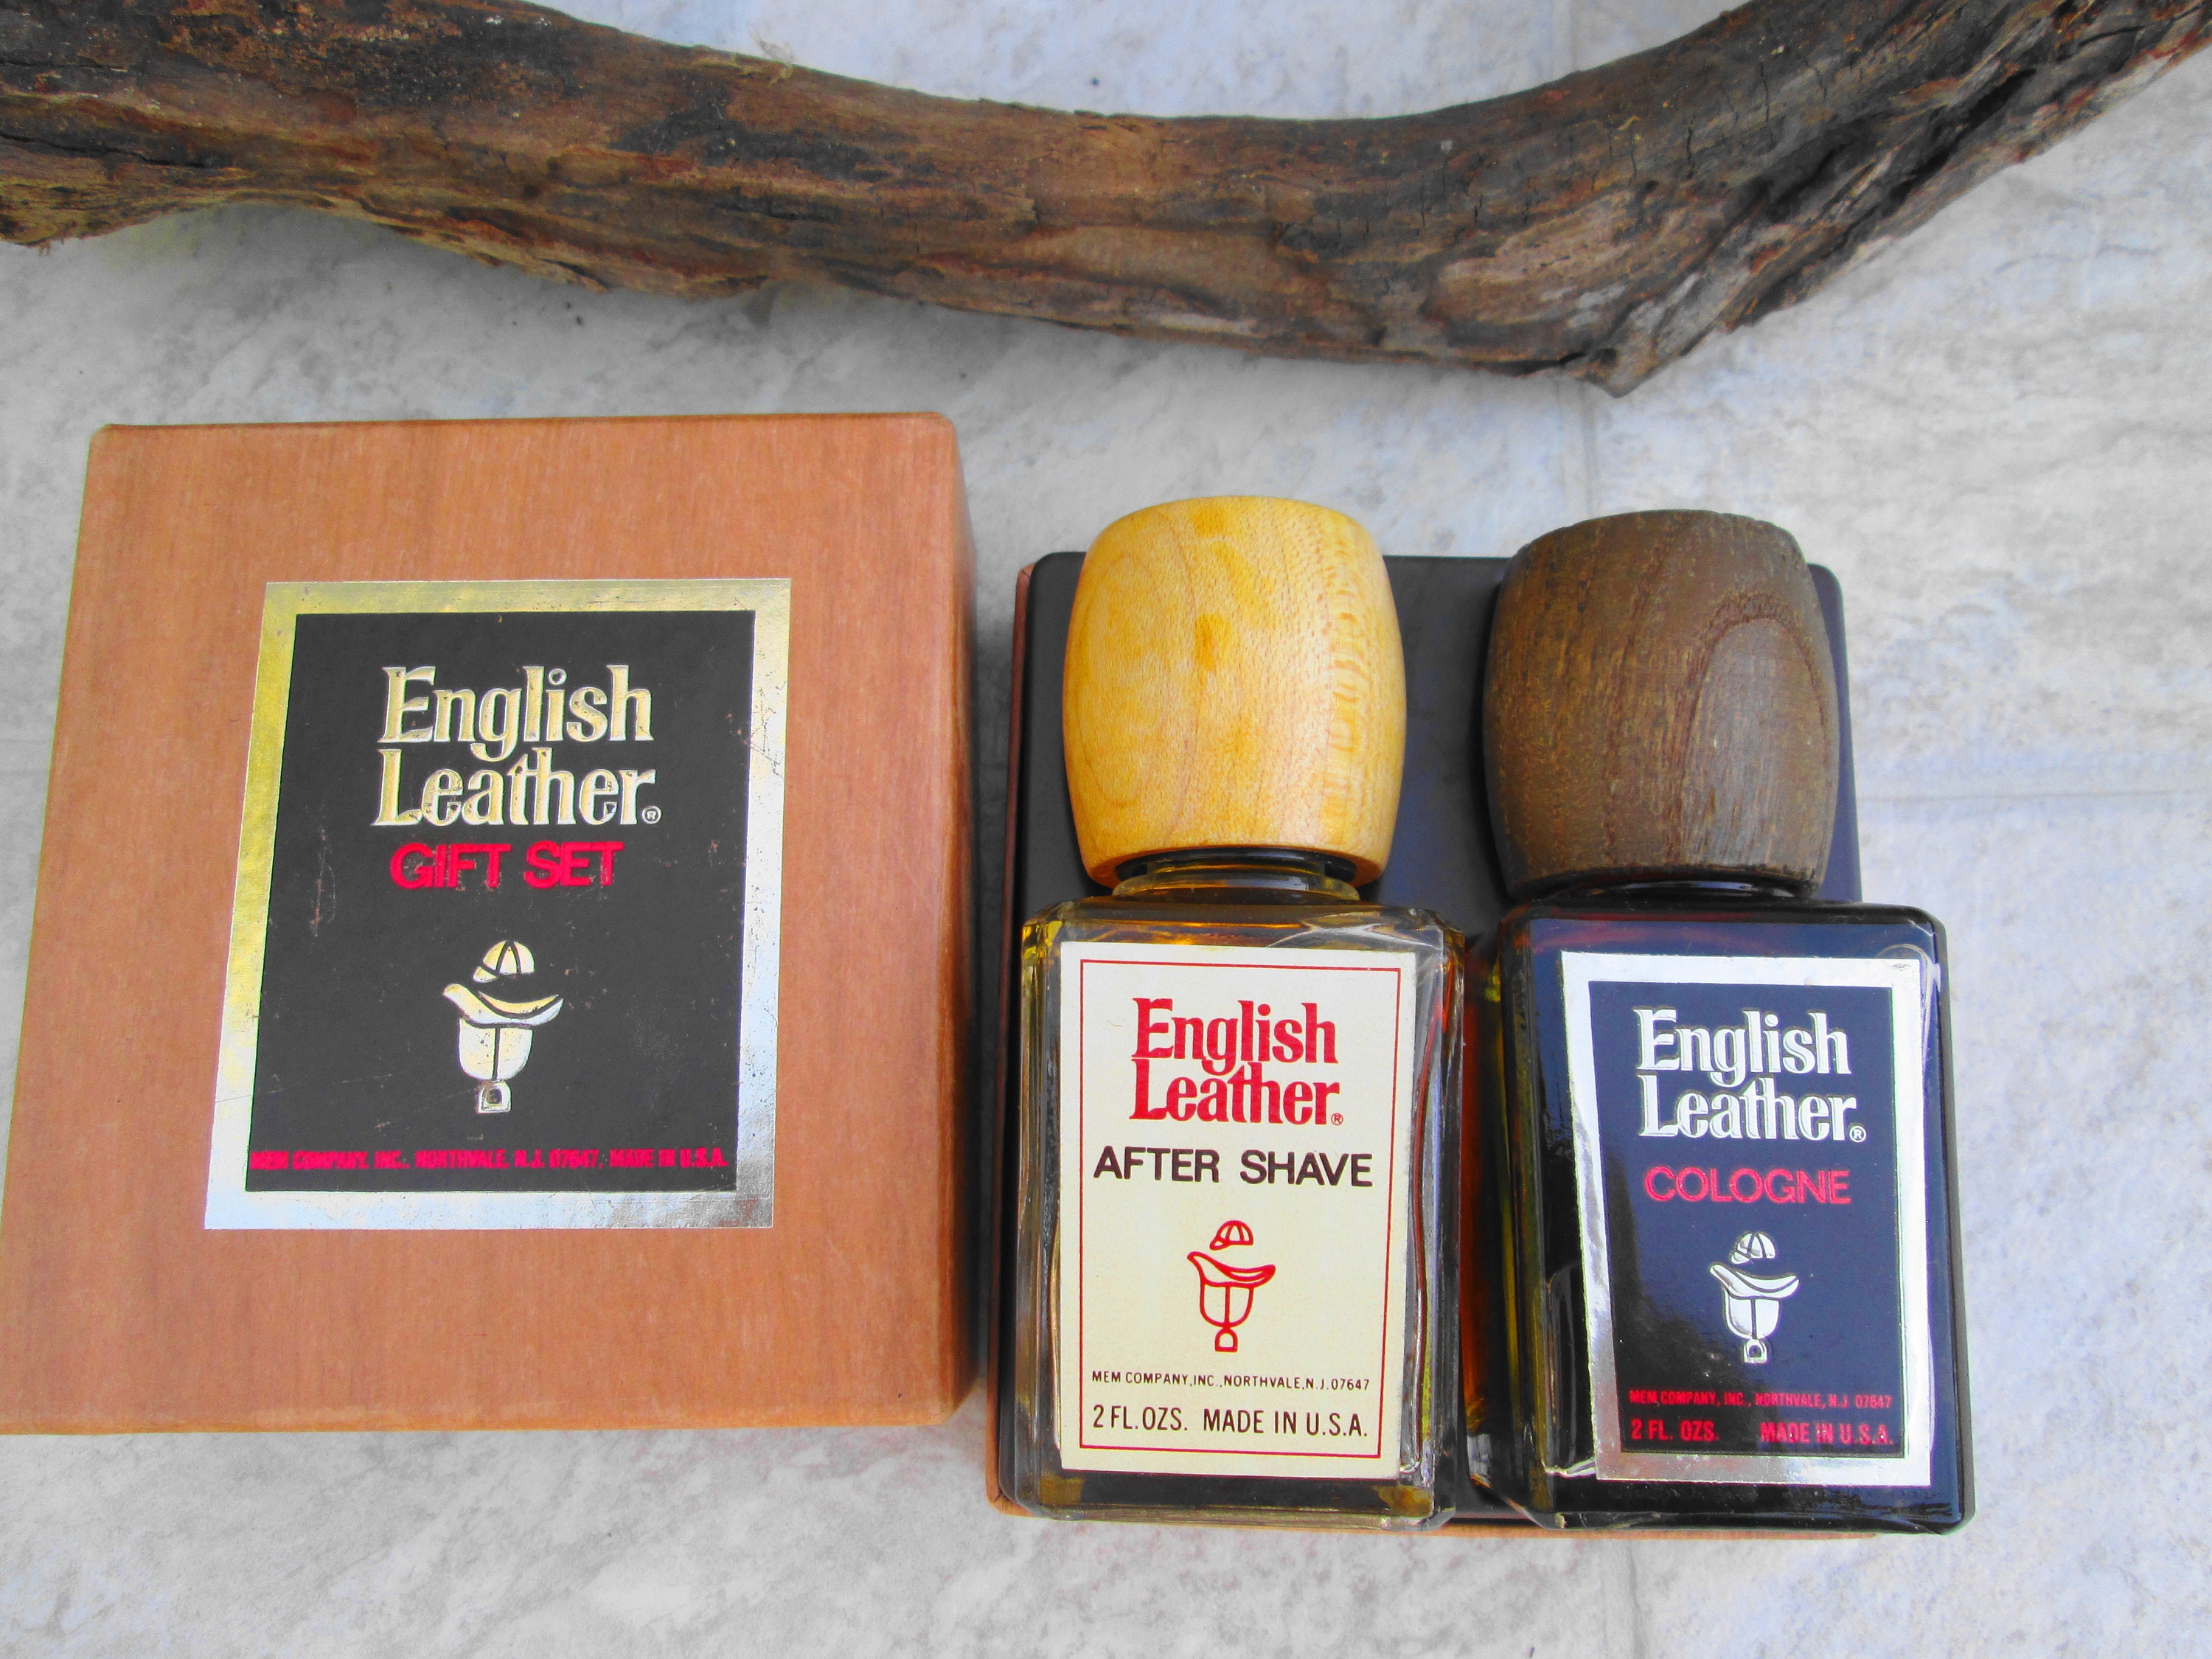 ENGLISH LEATHER Cologne Vintage Original Formula by MEM Company Authentic  Cologne Aftershave Set Men's Cologne & After Shave Aftershave -  Denmark